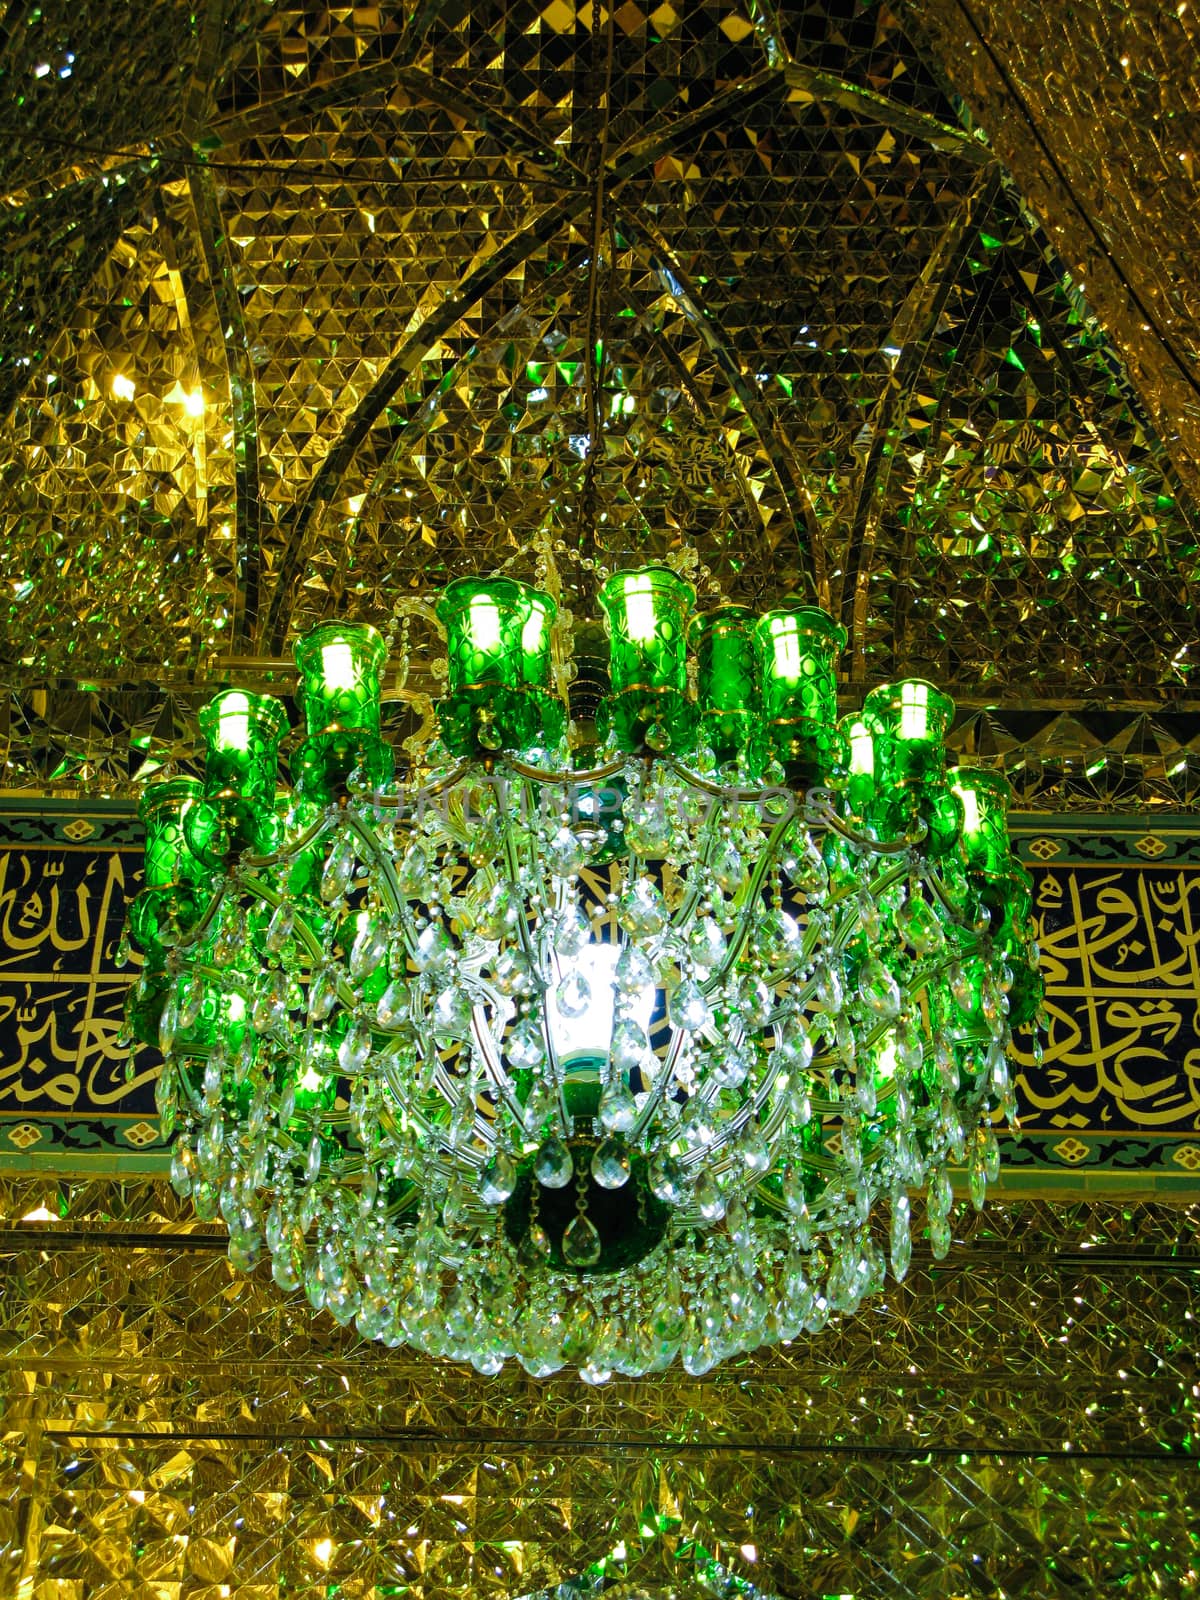 Shah Cheragh mosque mirror mosaic ceiling, Shiraz Iran by homocosmicos